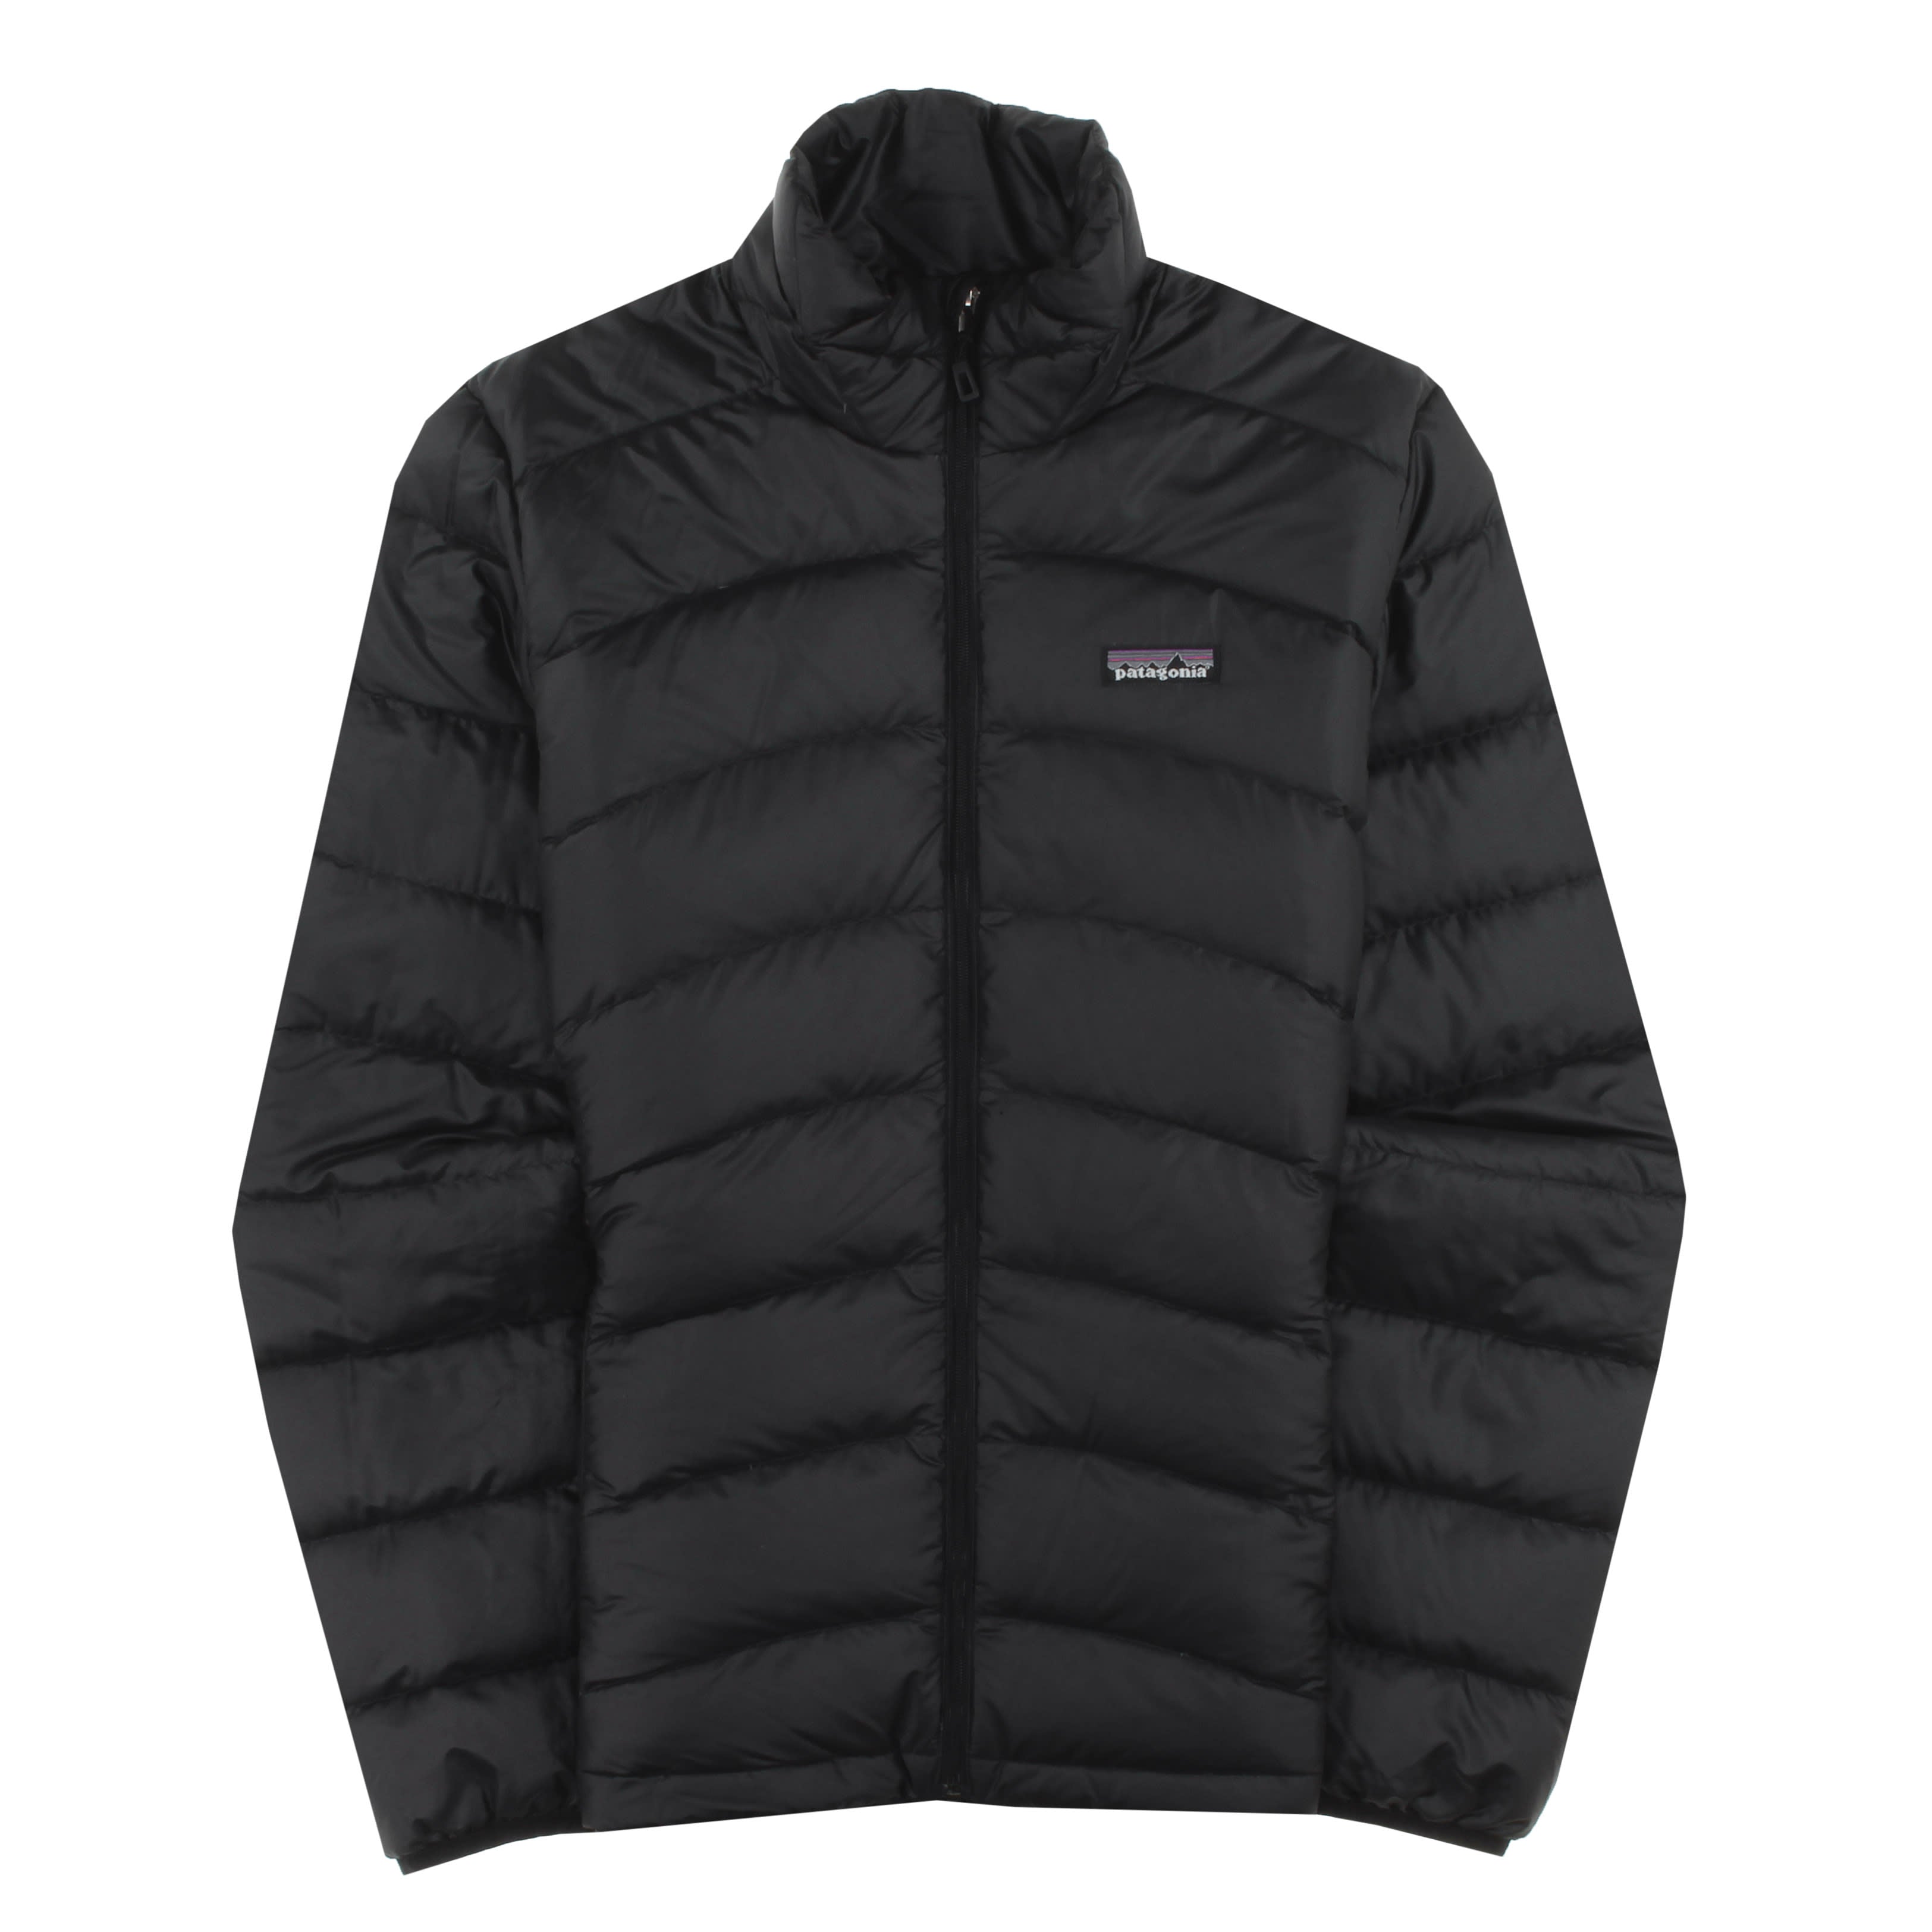 Patagonia Women's Hi-loft Down hooded vest, black, 84925-black – Norwood